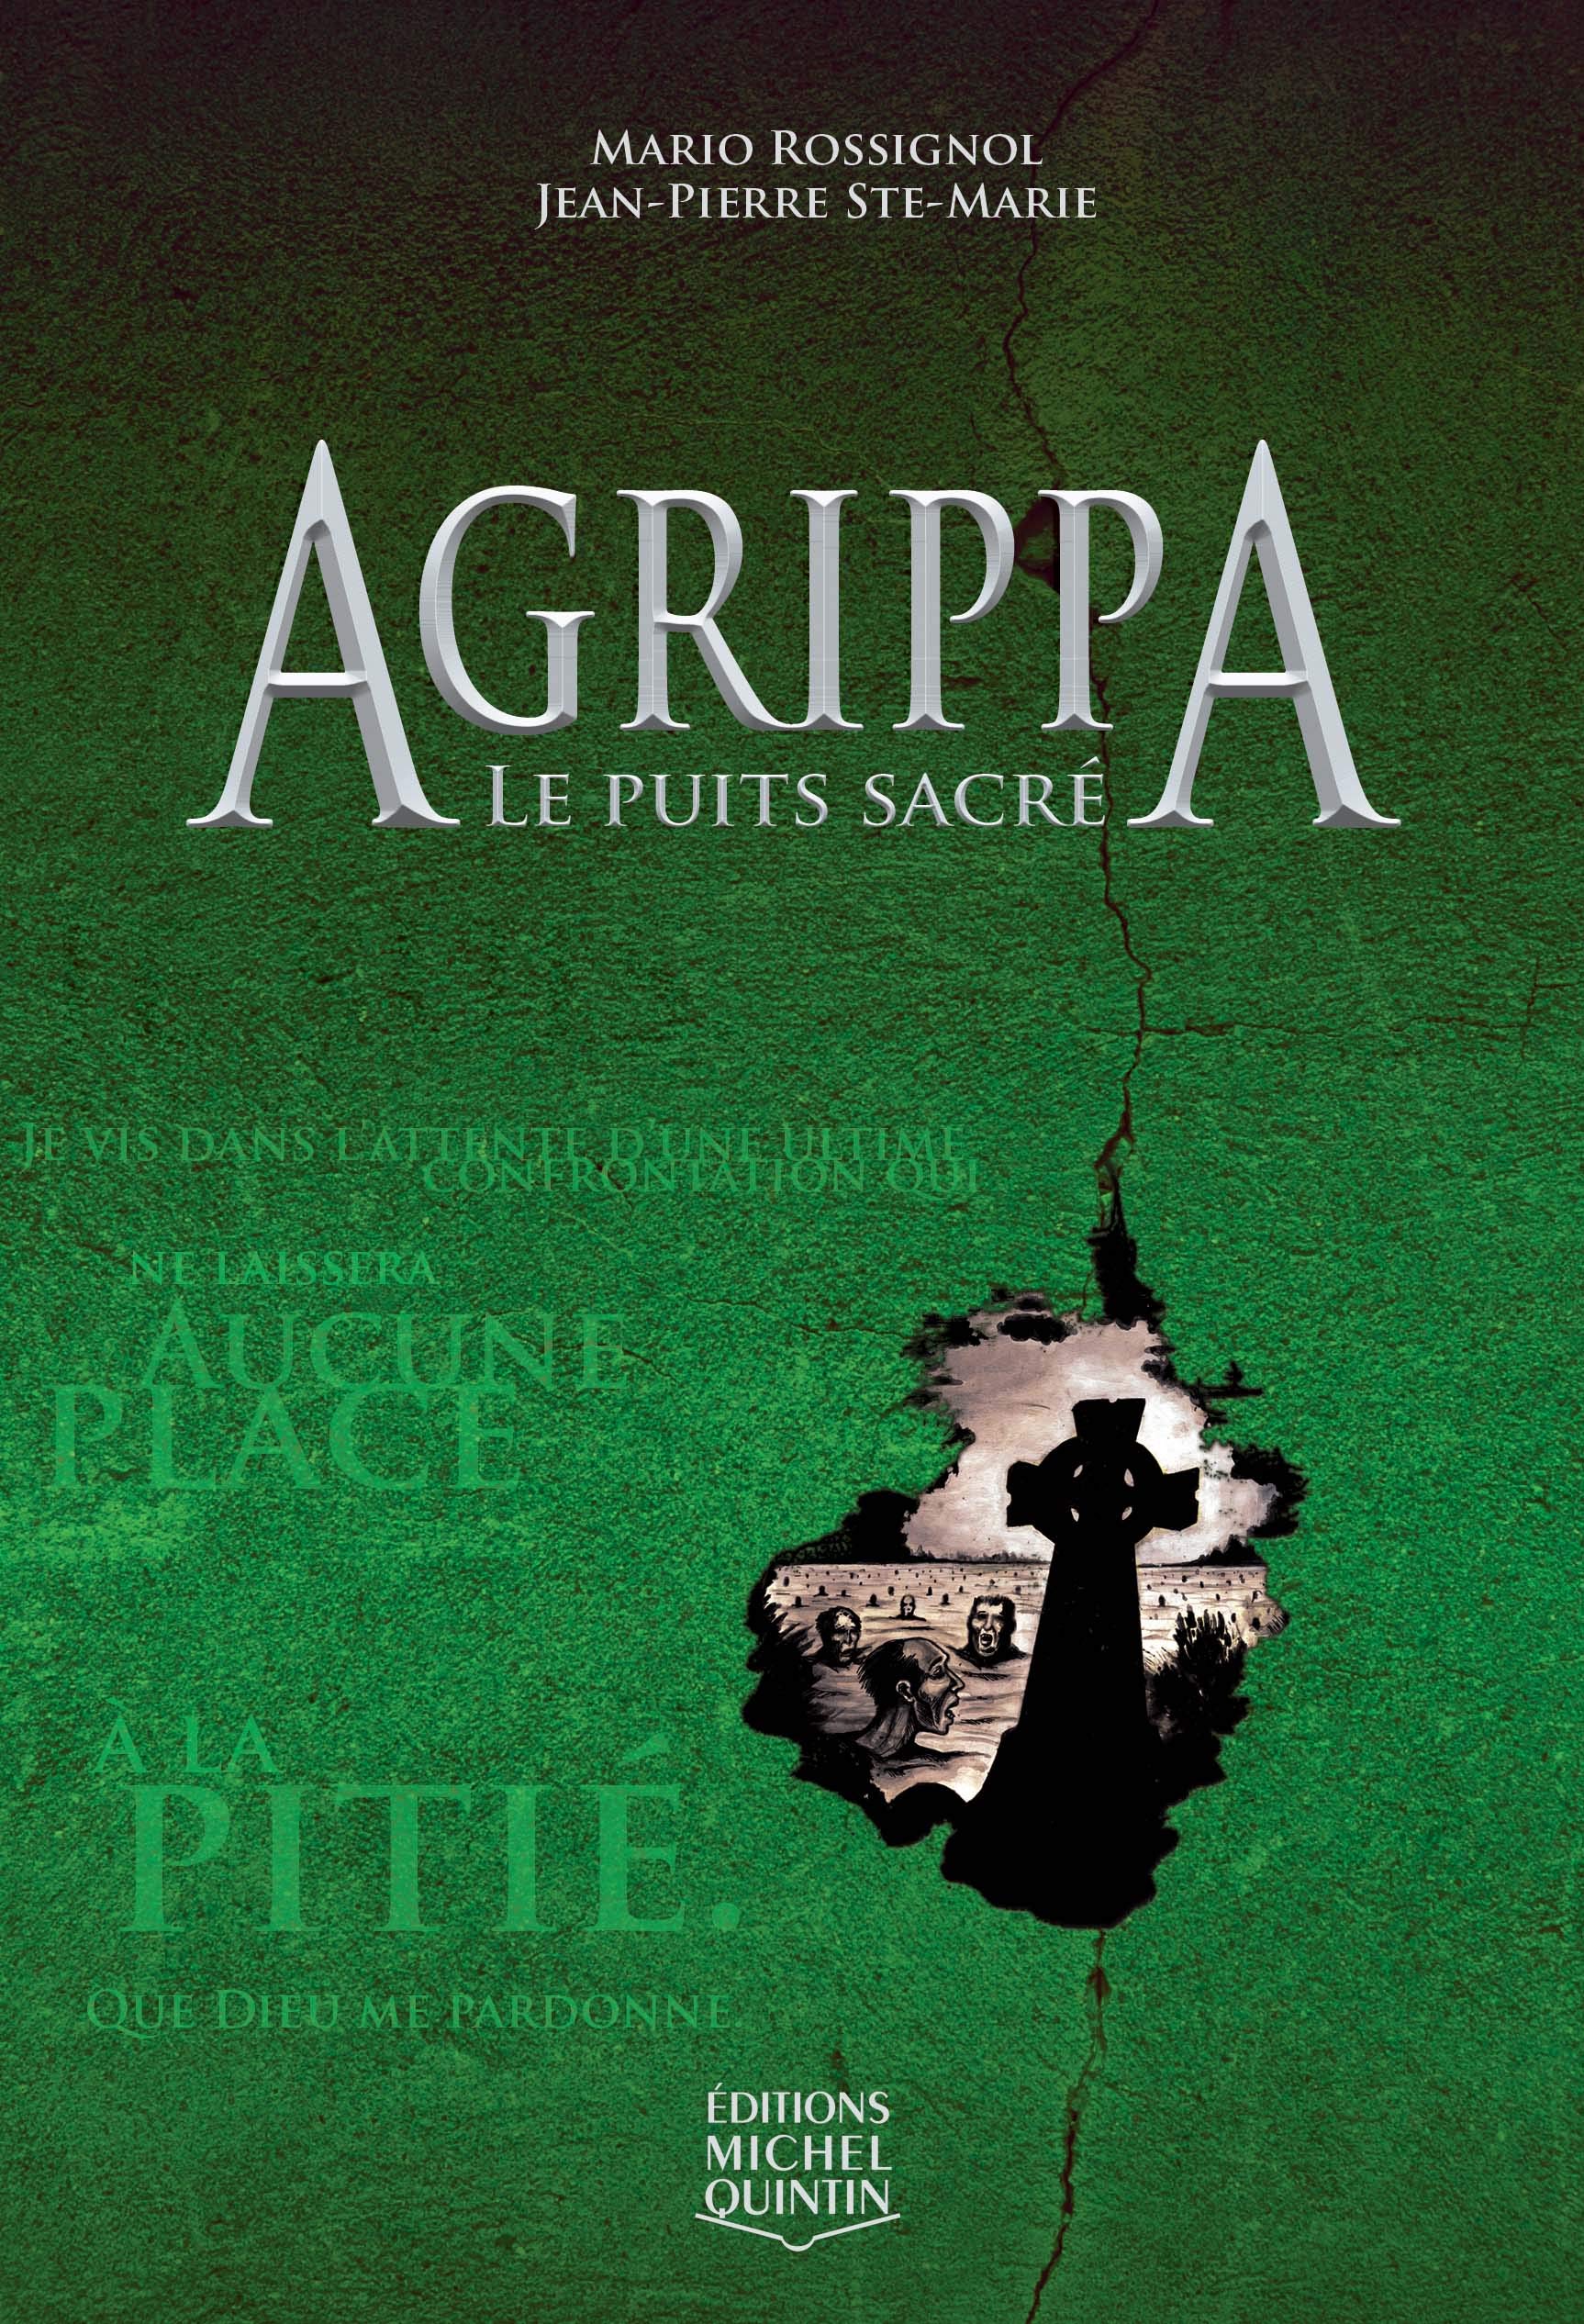 Livre ISBN 2894353863 Agrippa # 3 : Le puits sacré (Mario Rossignol)